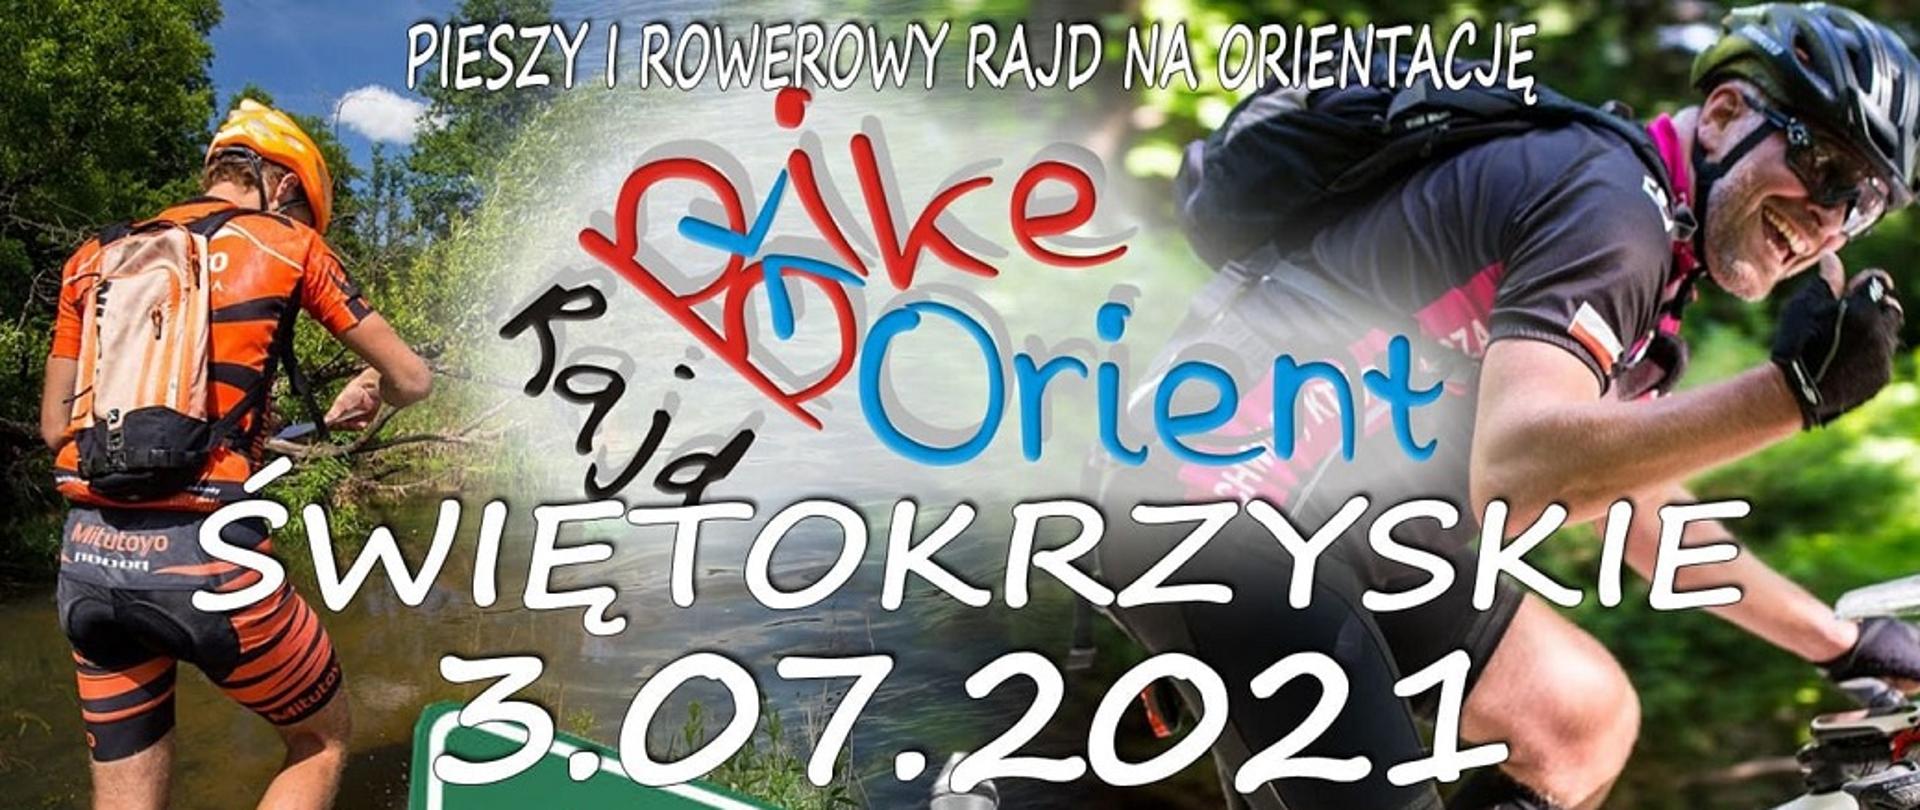 Plakat "Orient bike"